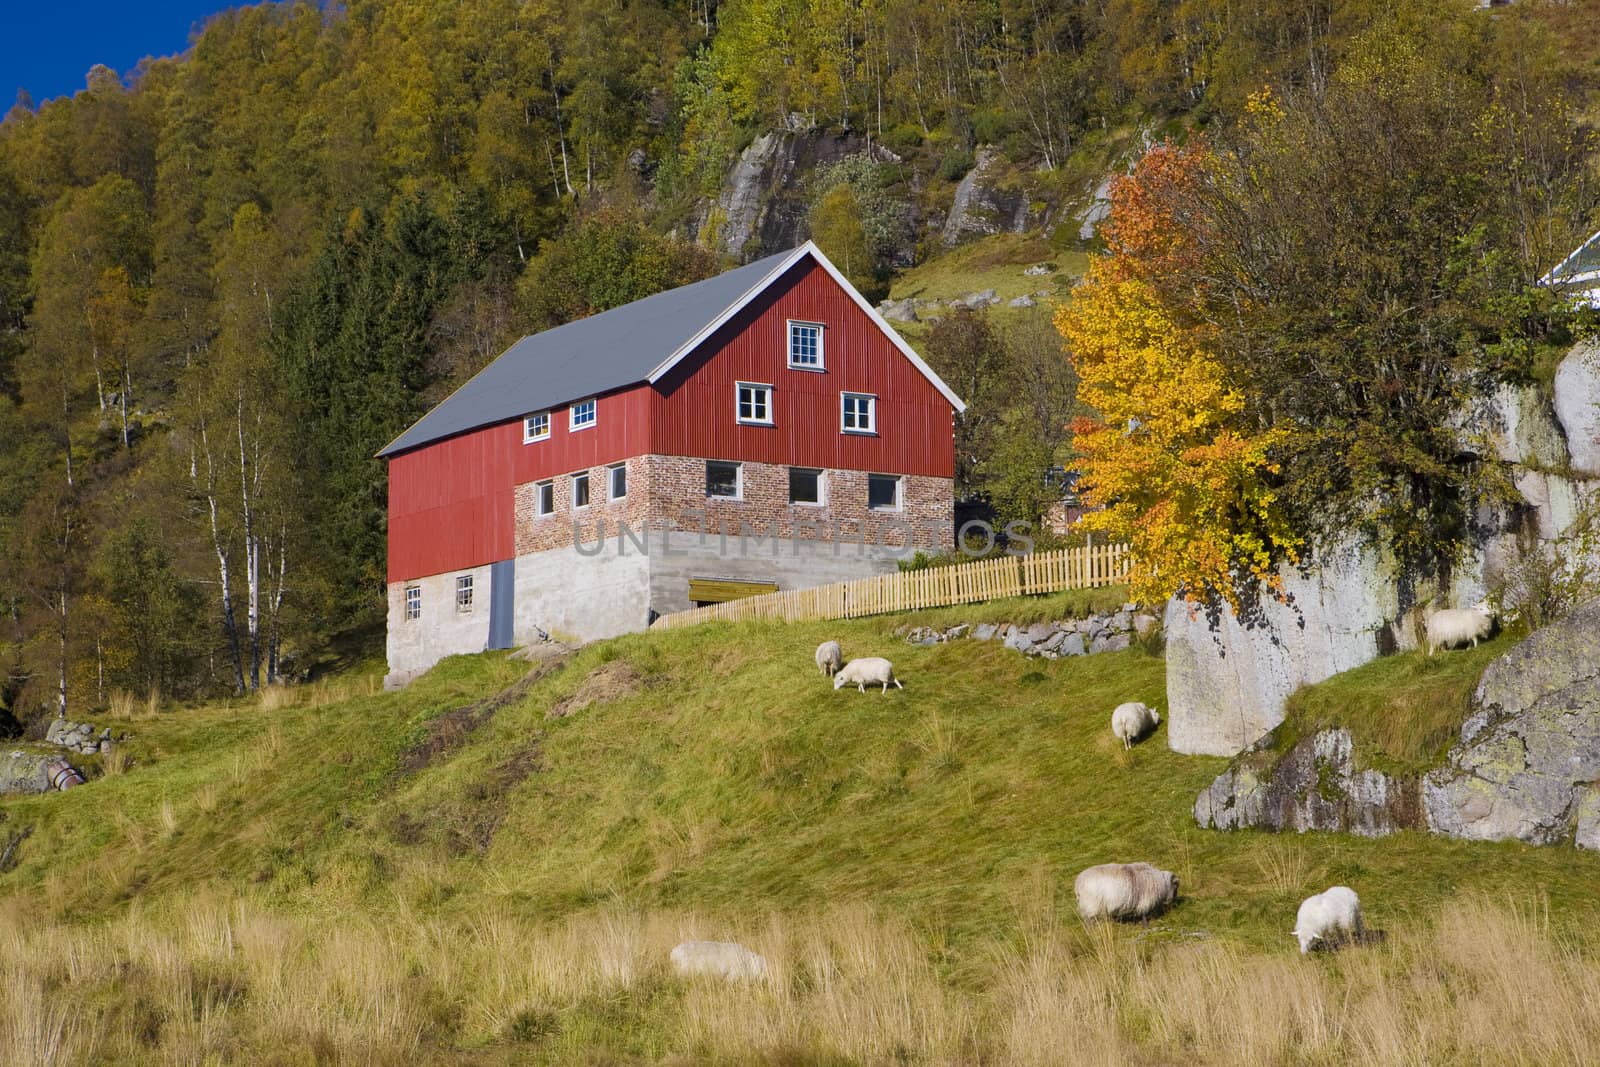 Kvaevemoen, Norway